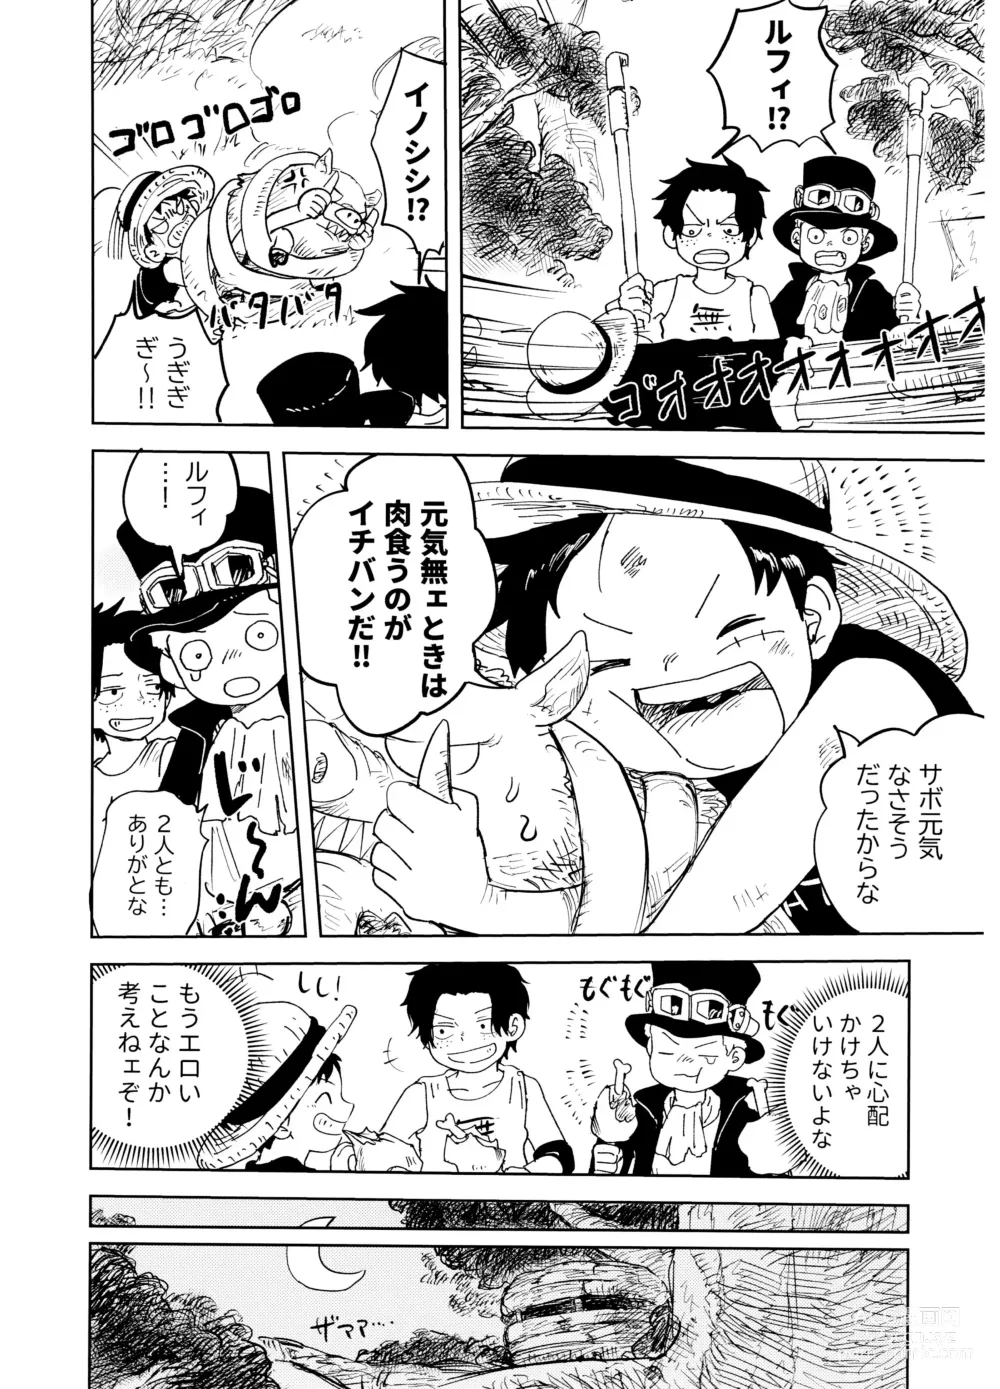 Page 28 of doujinshi Himitsu no Colubo Yama